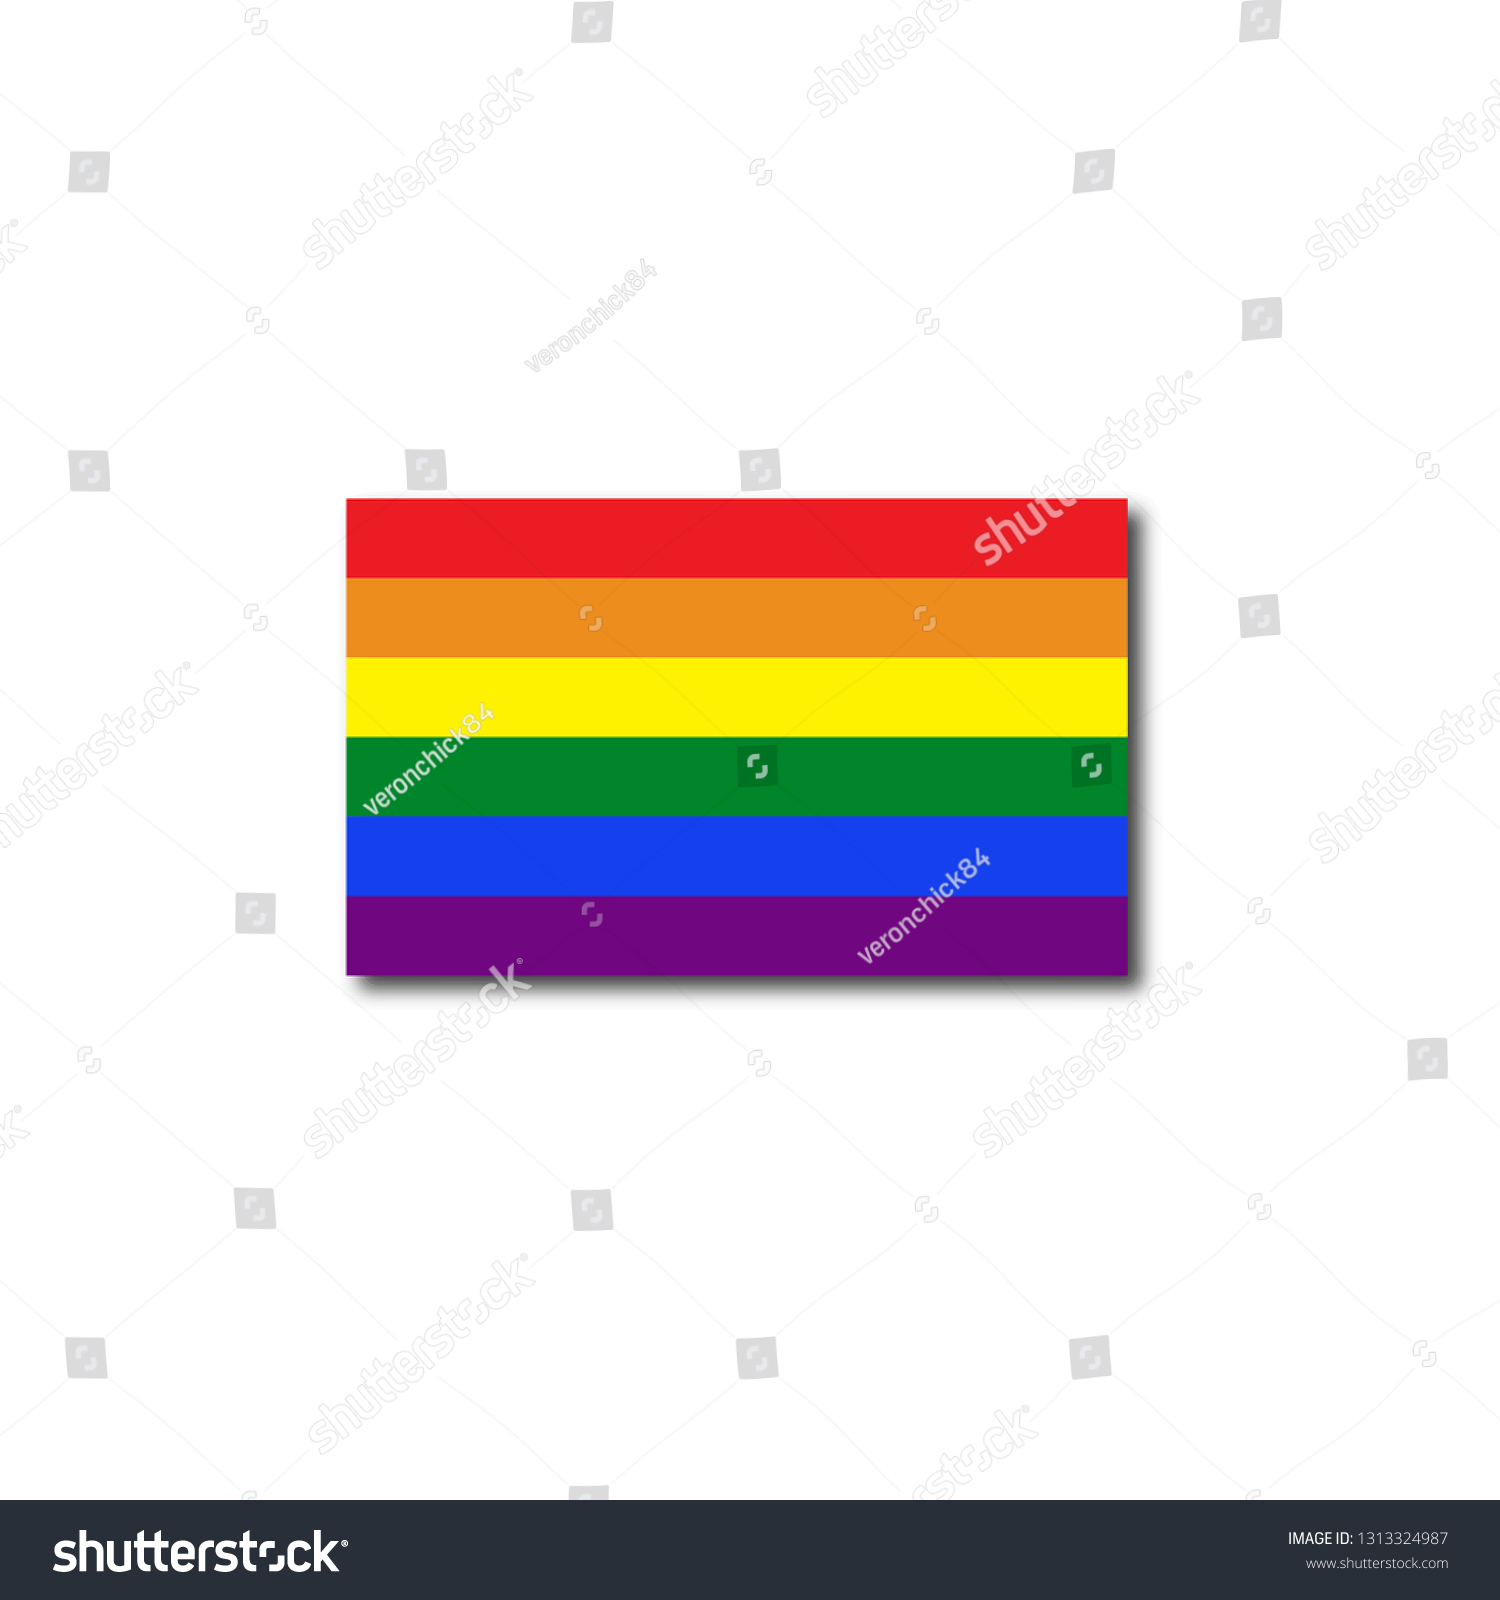 Gay Vector Flag Or Lgbt Rainbow Flag Pride Royalty Free Stock Vector 1313324987